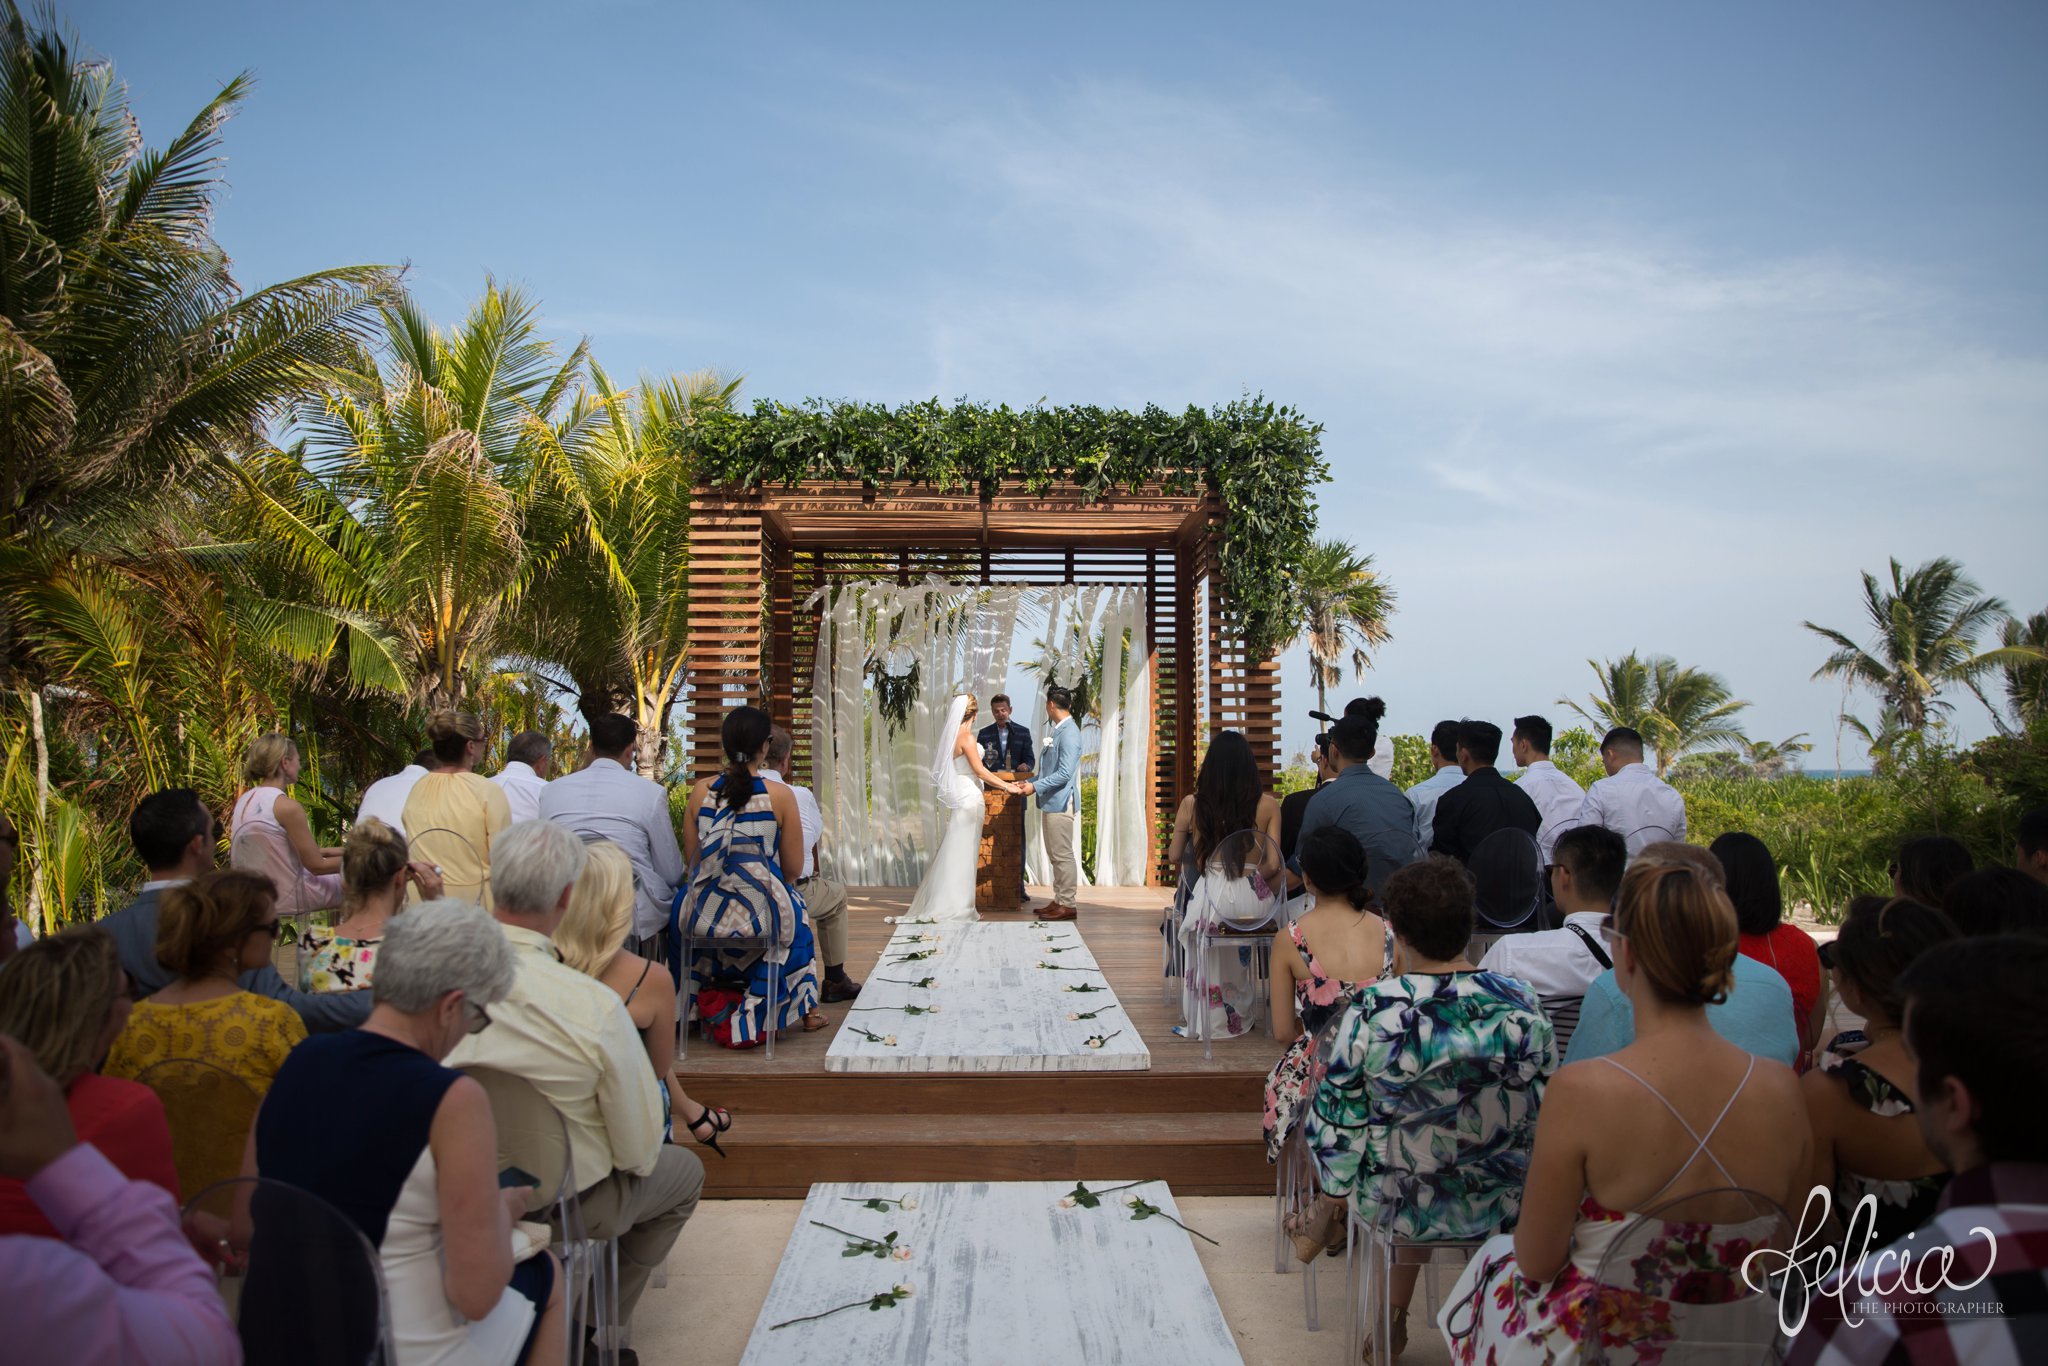 images by feliciathephotographer.com | Destination Beach Wedding | Unicco 20 87 | Photographer | L&S Travel | ceremony | marriage | ocean view | blue sky | wooden gazebo | palm trees | green | bride | groom | holding hands | symmetry | 